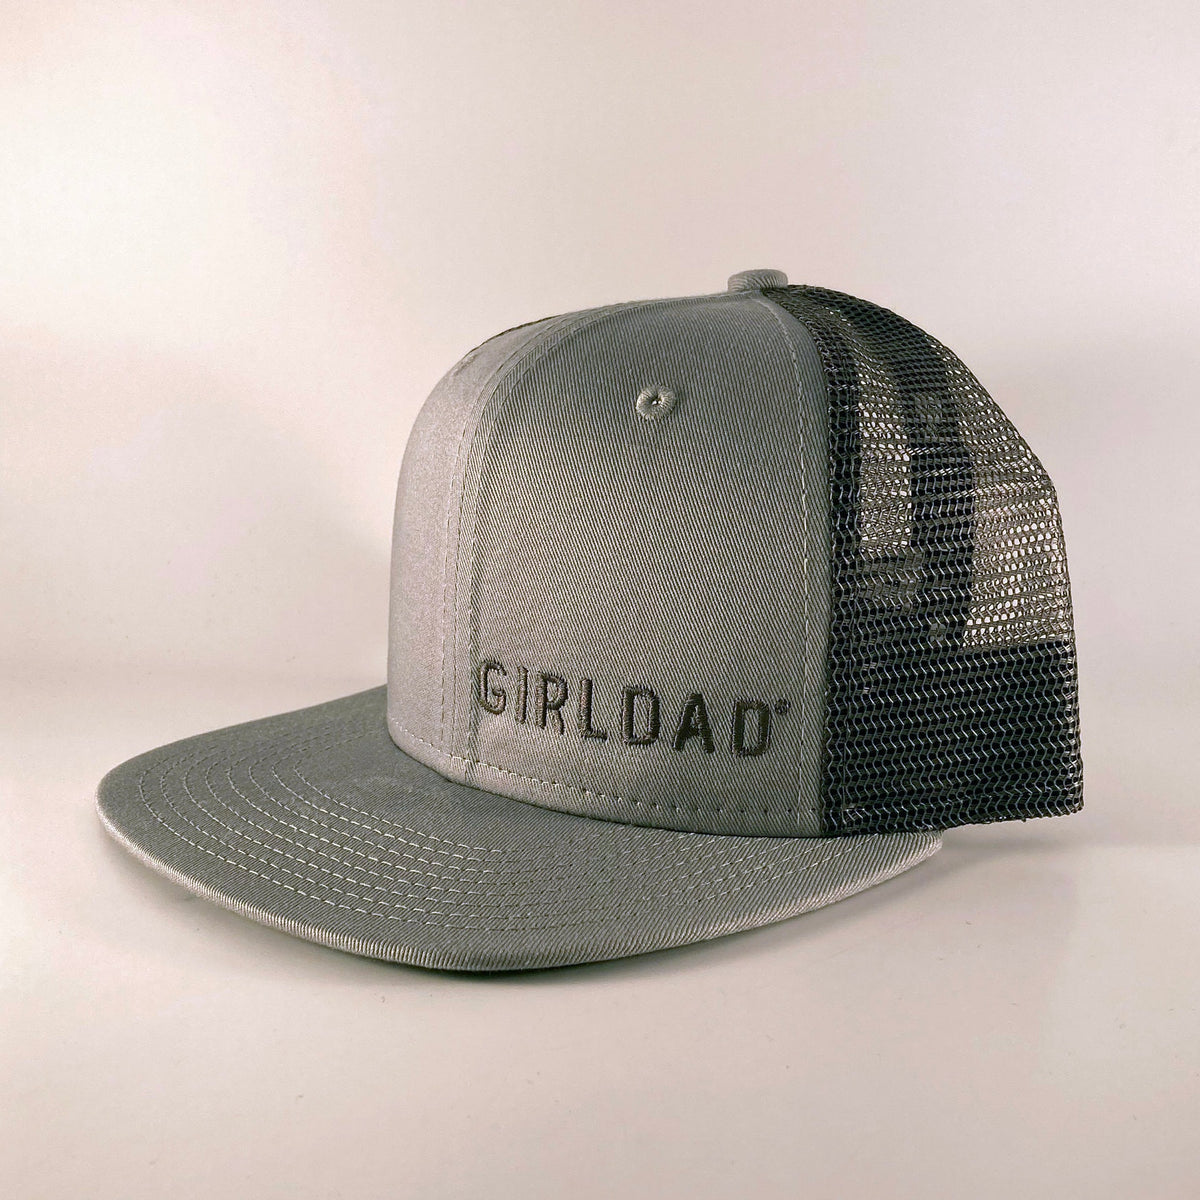 Girldad® Navy/Navy Embroidered Trucker Hat - Fynnleigh Mae & Co